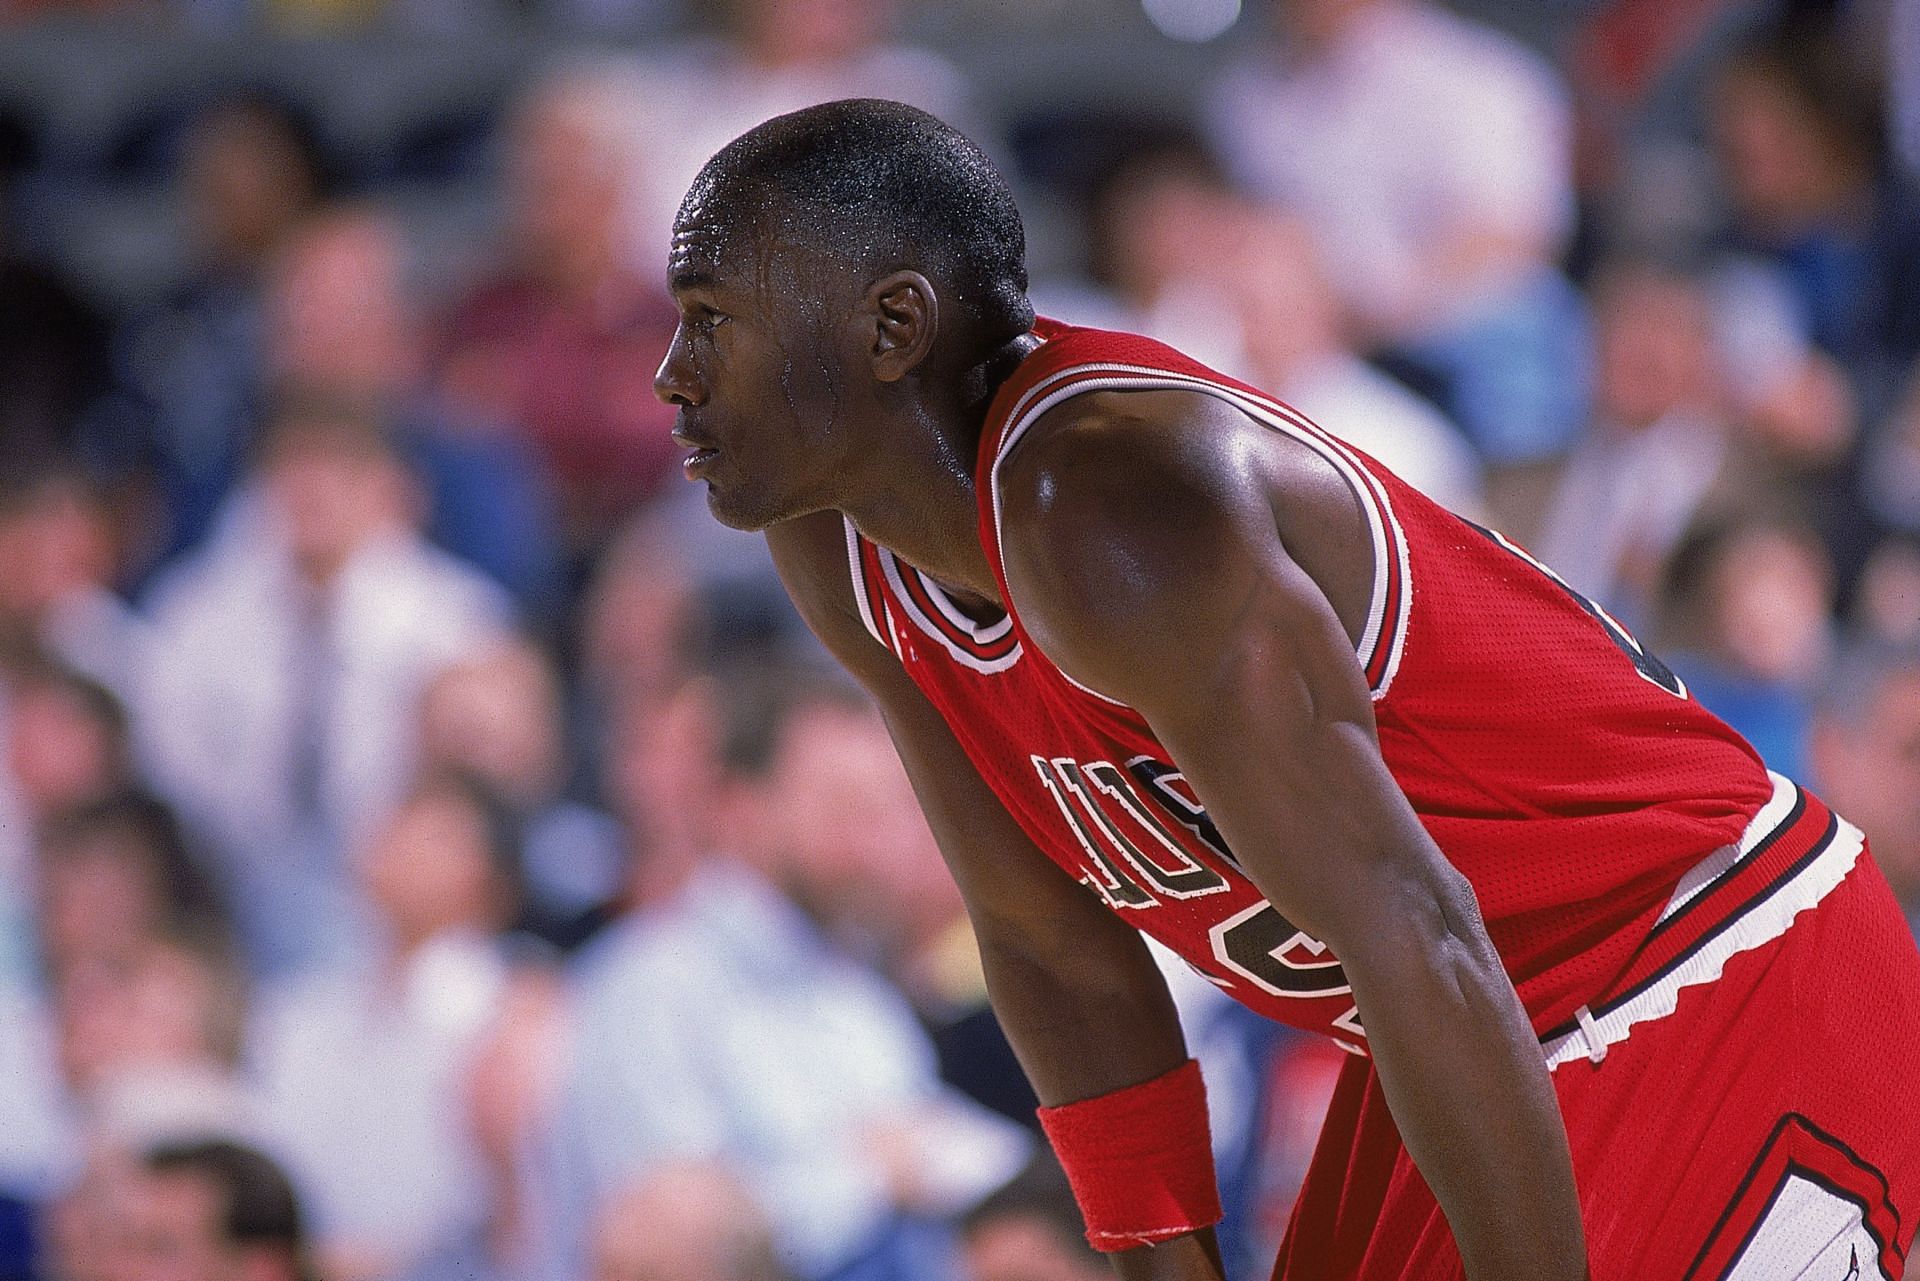 Michael Jordan of the Chicago Bulls.